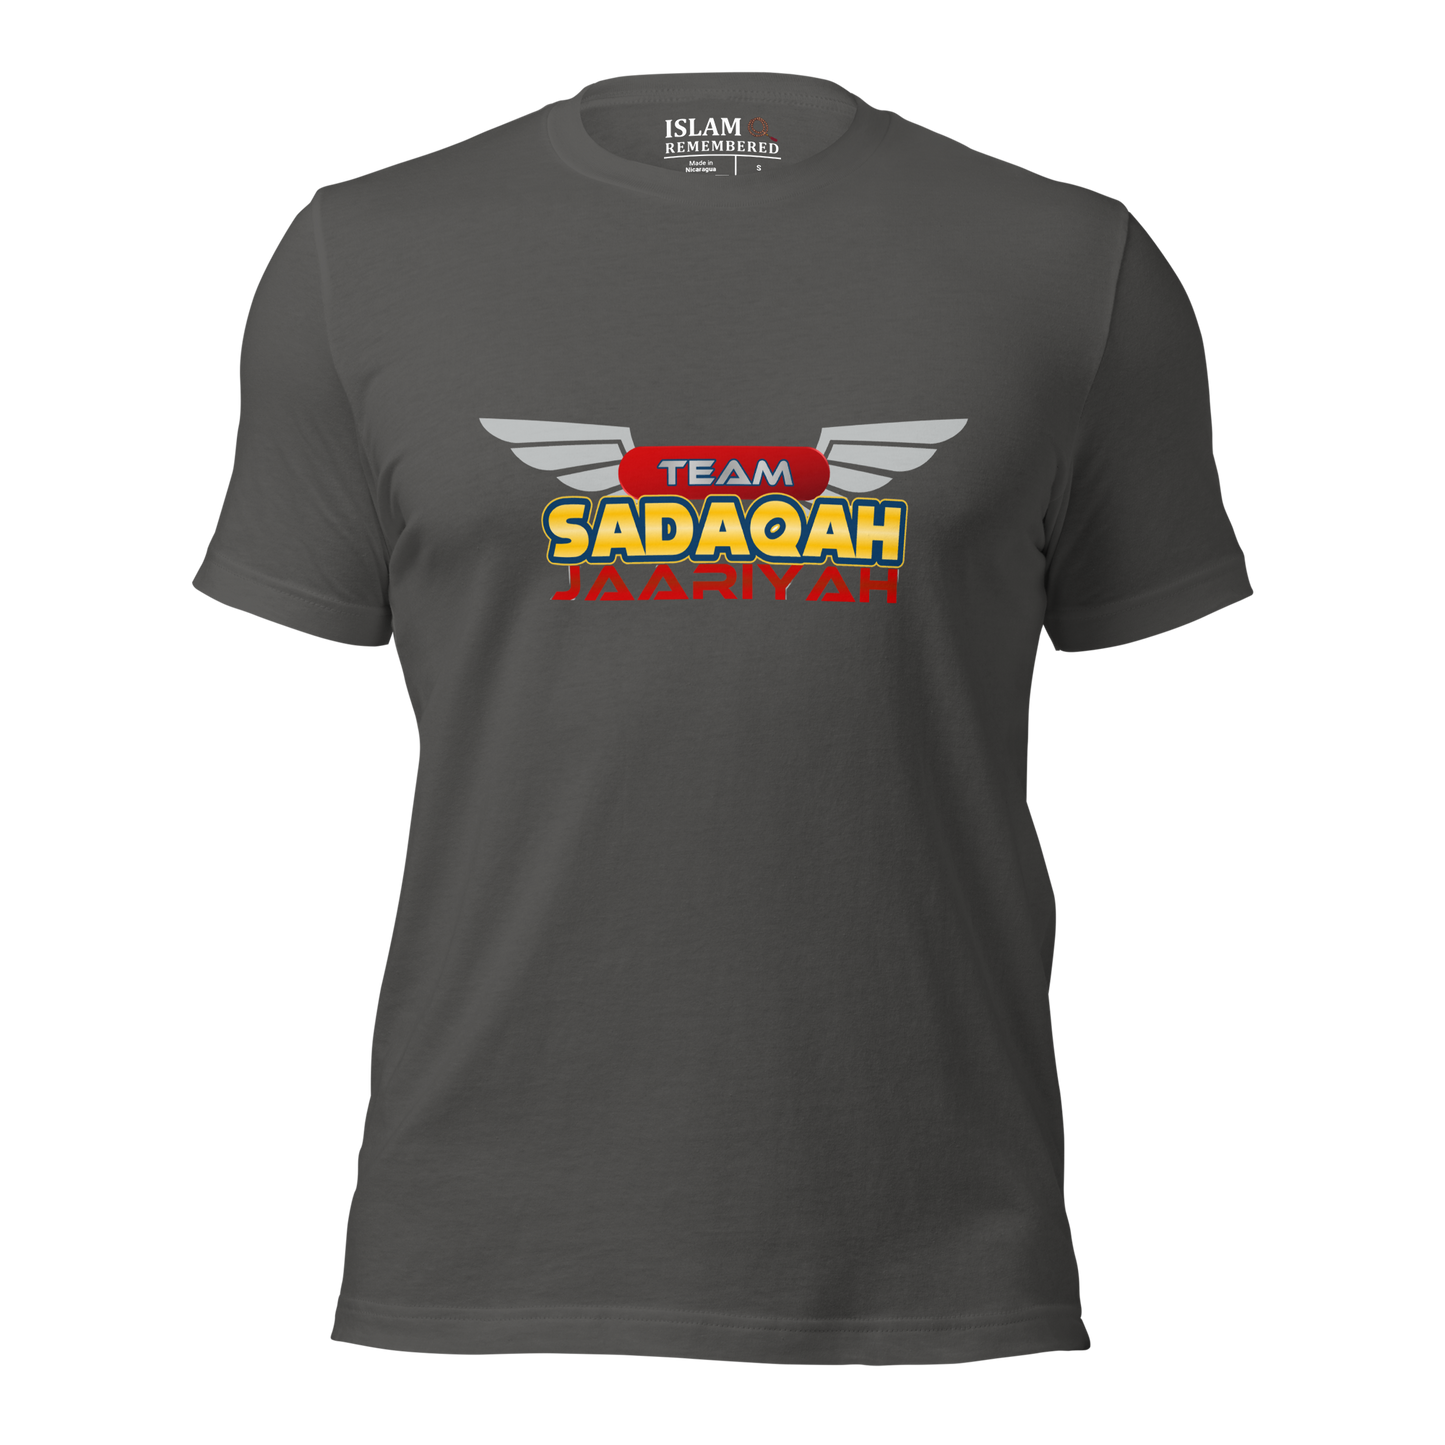 ADULT T-Shirt - TEAM SADAQAH JAARIYAH - Wings